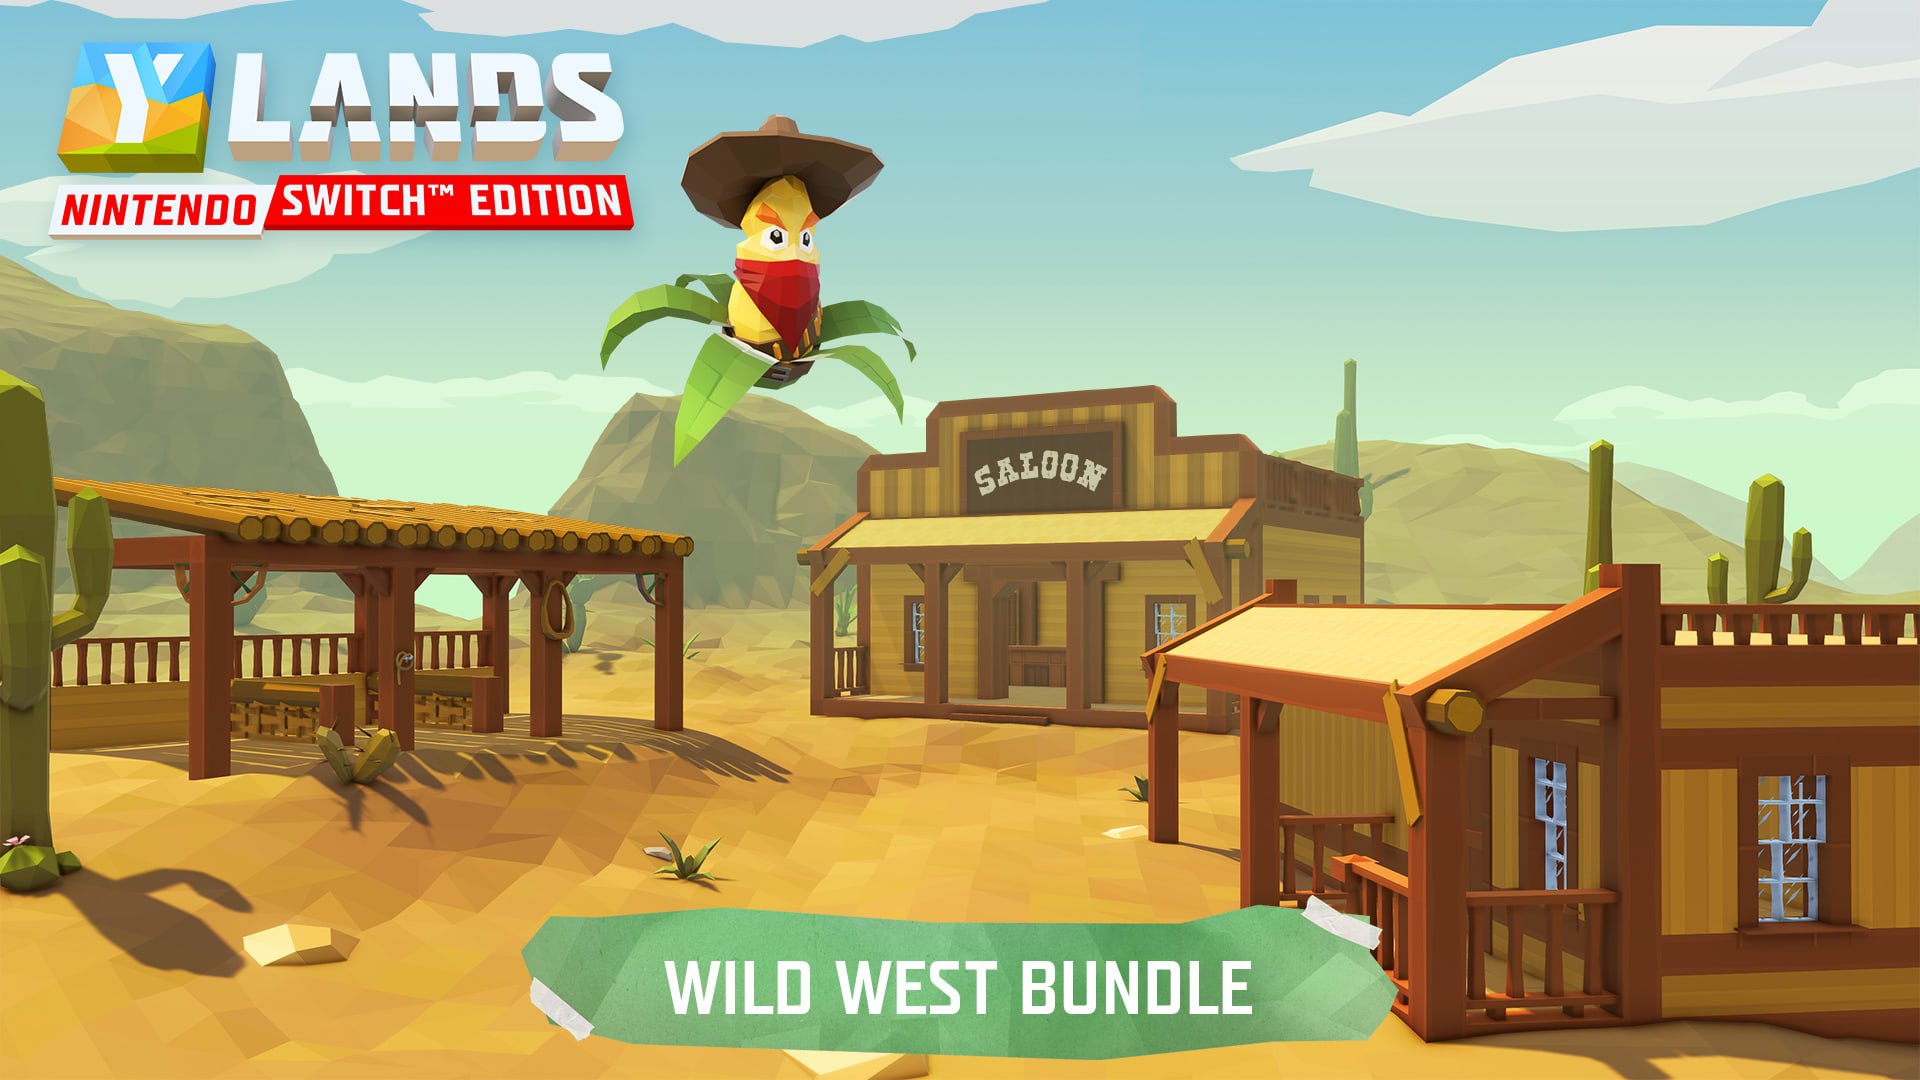 Ylands Nintendo Switch™ Edition - Wild West Bundle